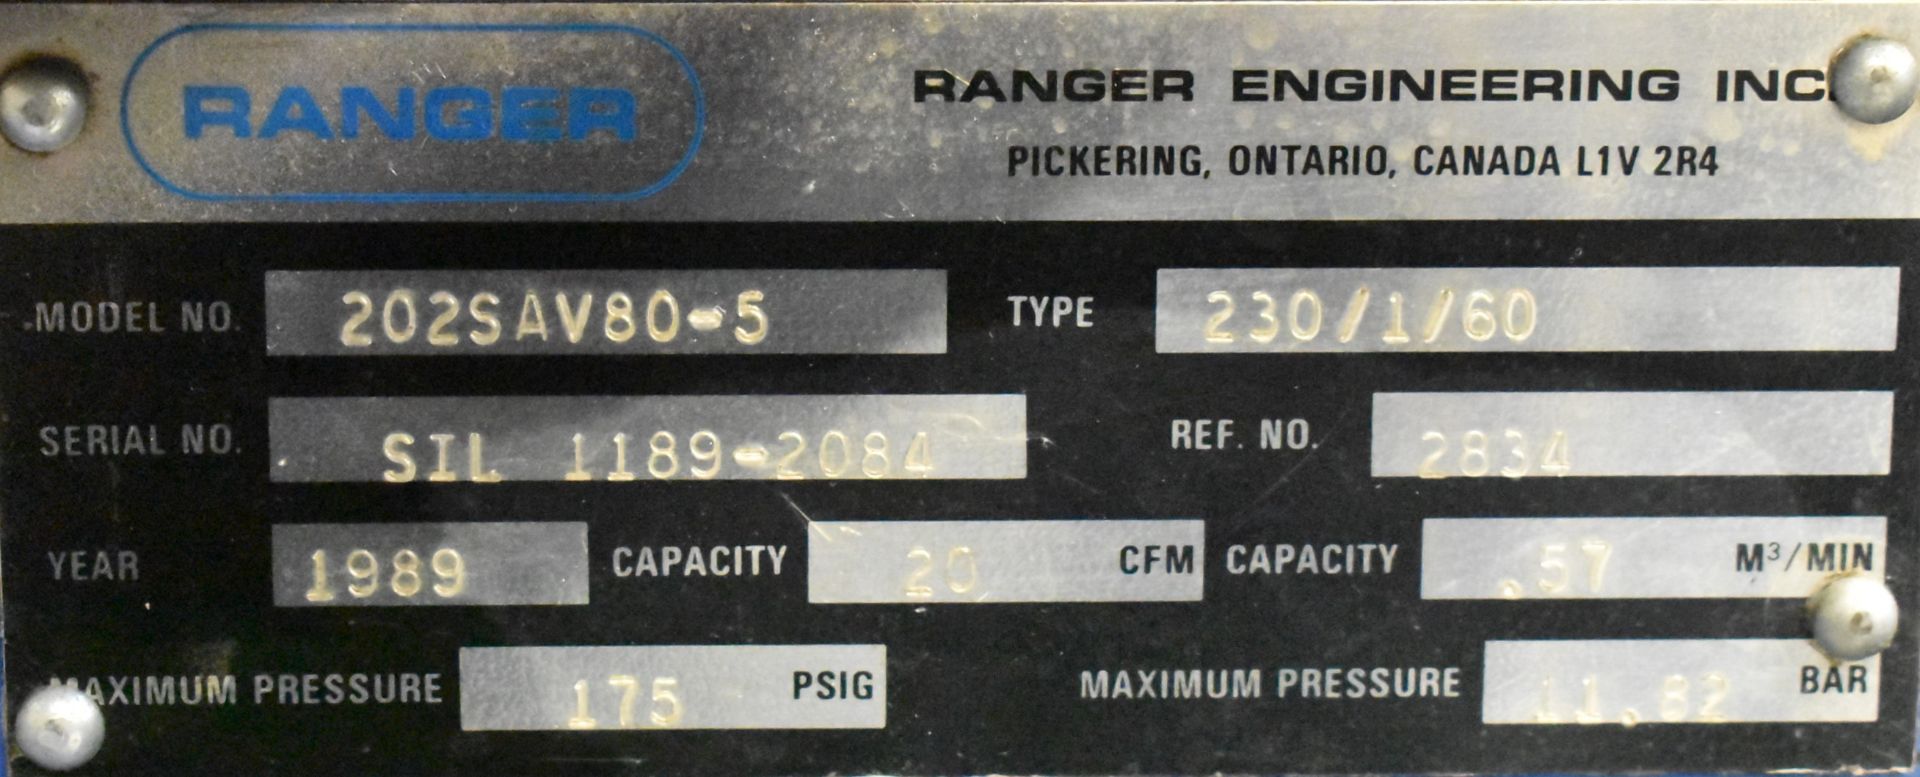 RANGER 202SAV80-5 5HP AIR COMPRESSOR WITH 20CFM CAPACITY, 11.82BAR MAXIMUM PRESSURE, 230V/1PH/ - Image 3 of 4